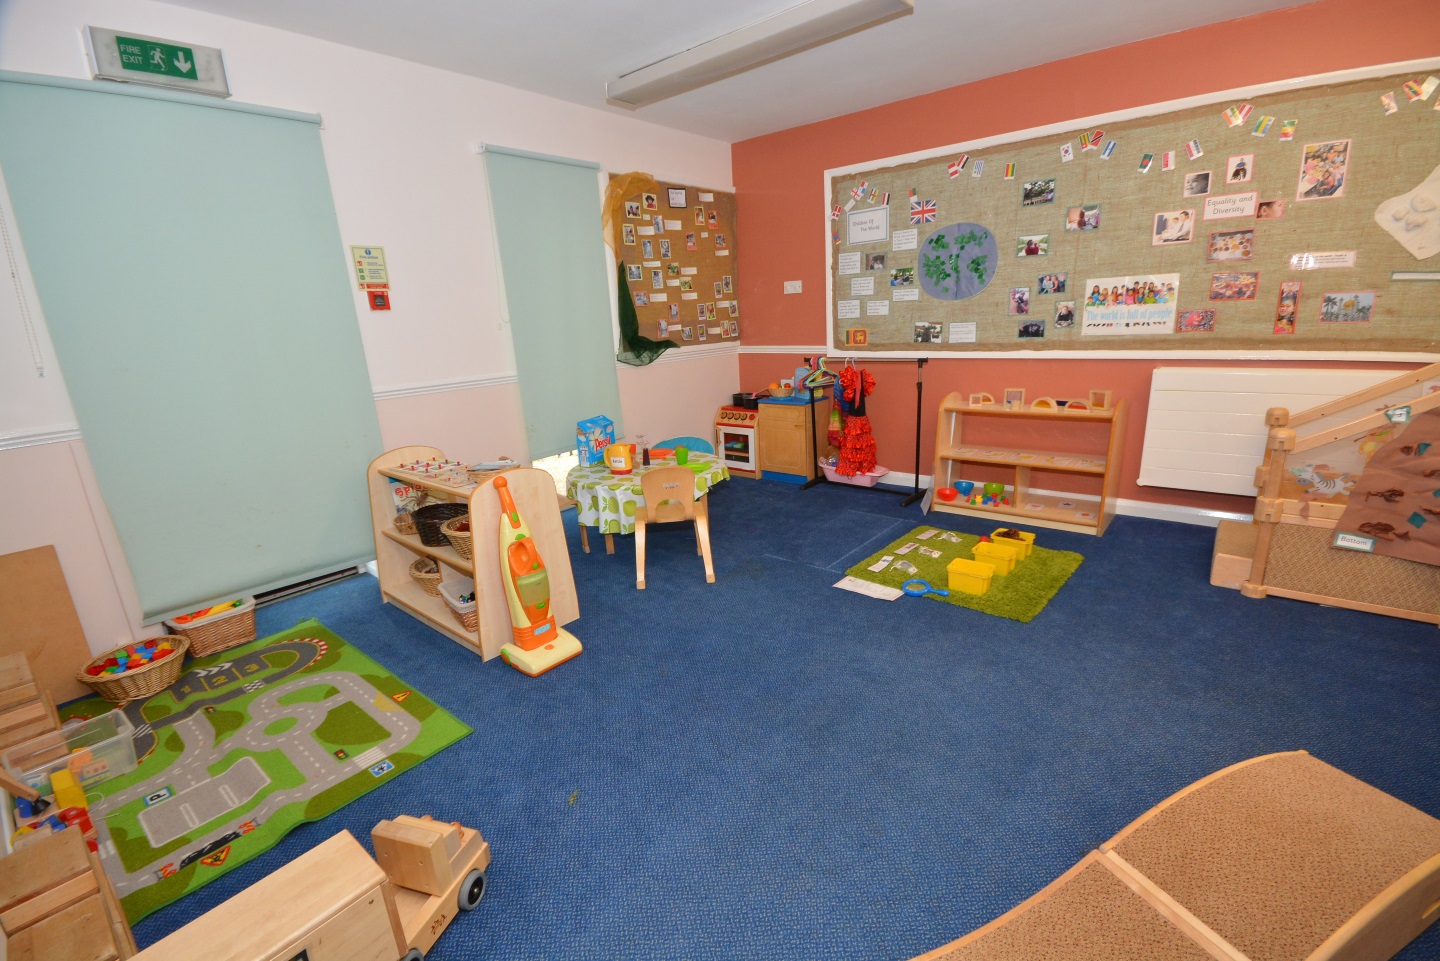 Bright Horizons Tingley Day Nursery and Preschool Leeds 01134 681057